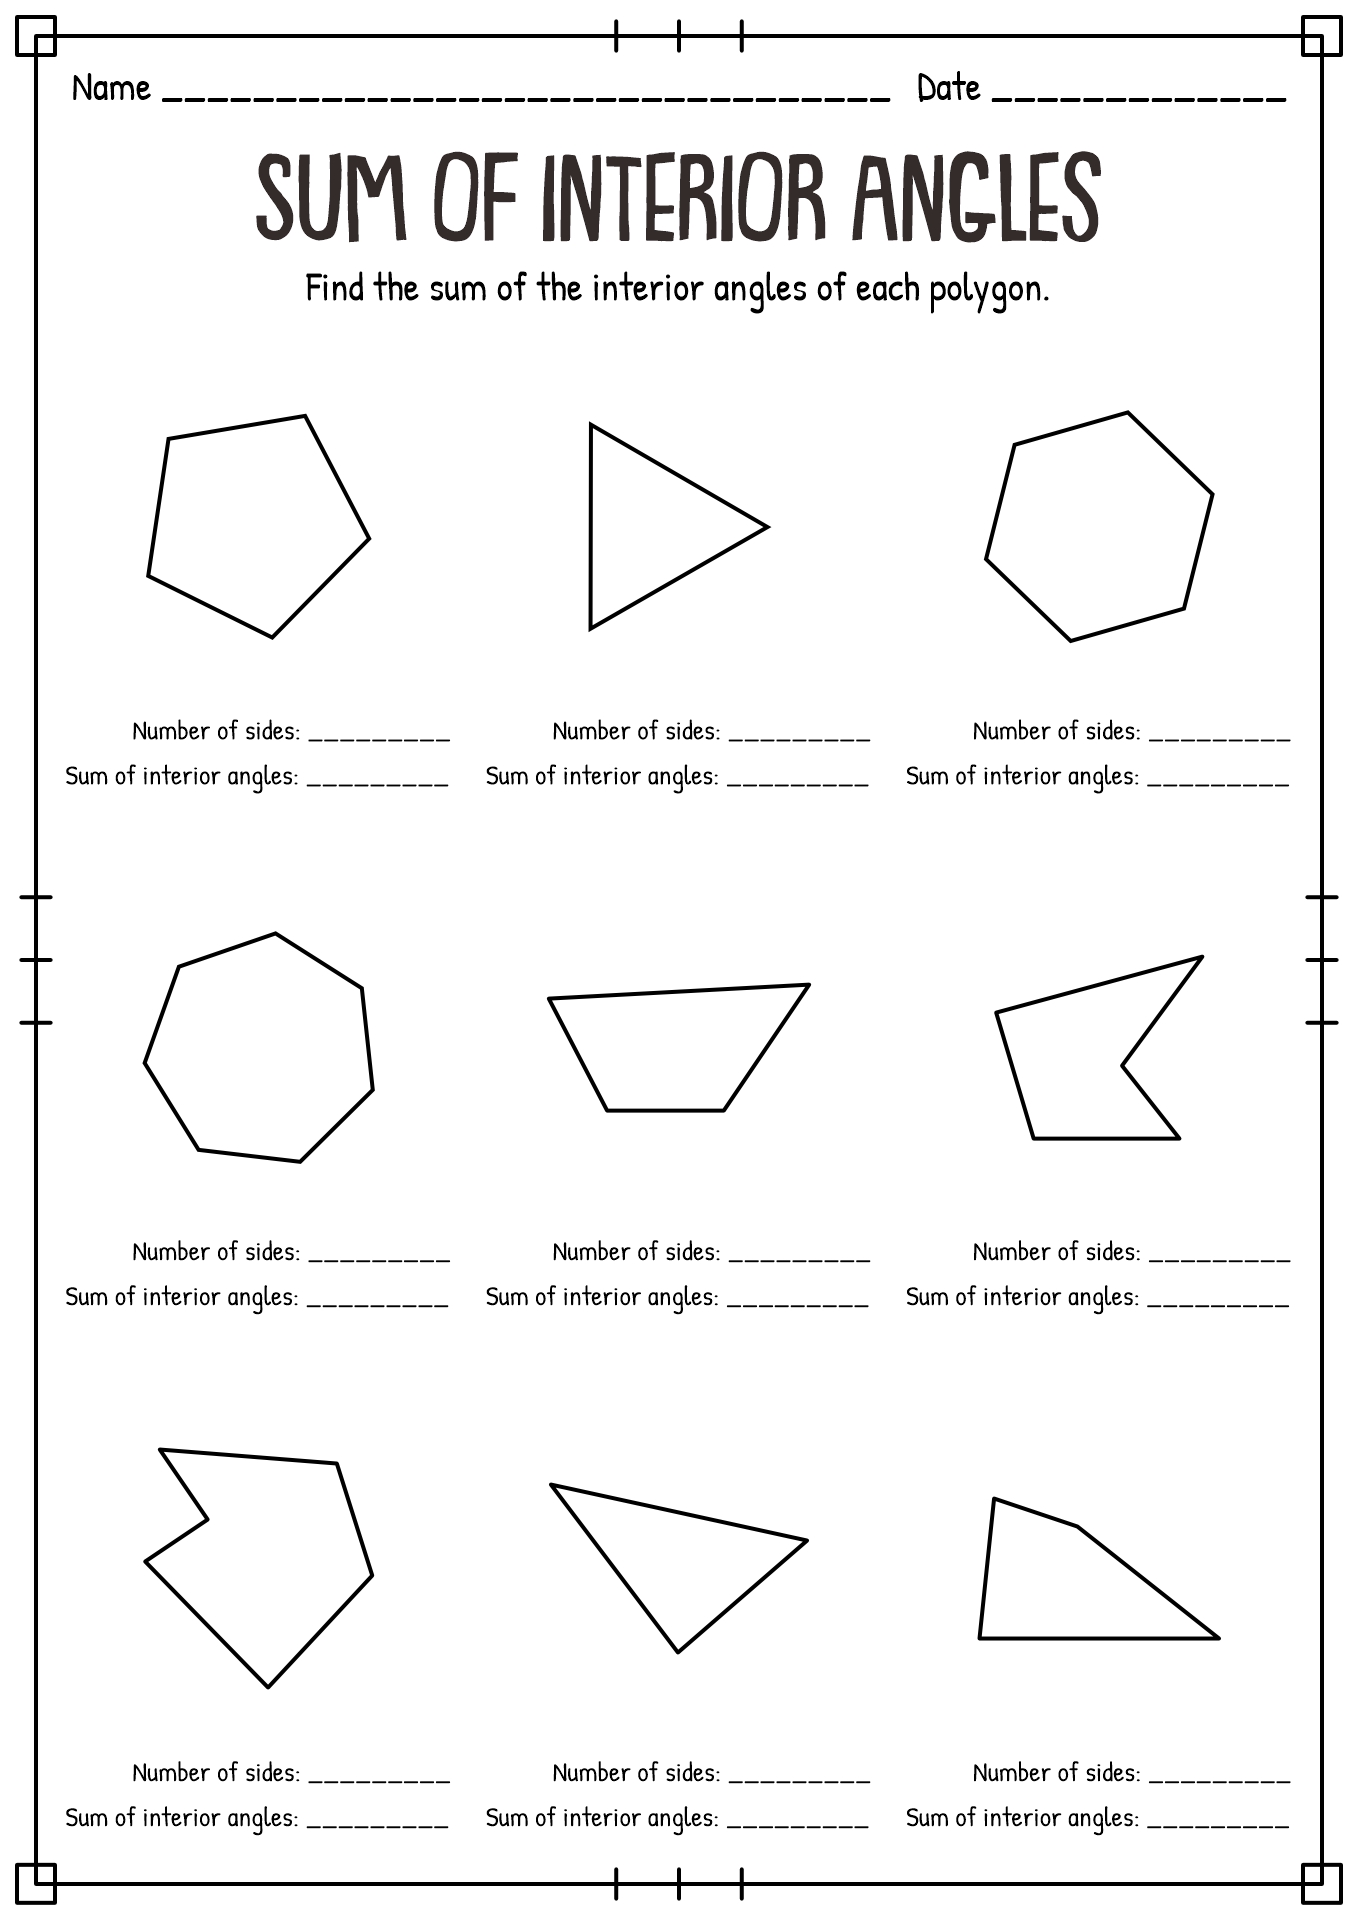 Sum of Interior Angles of a Regular Polygon